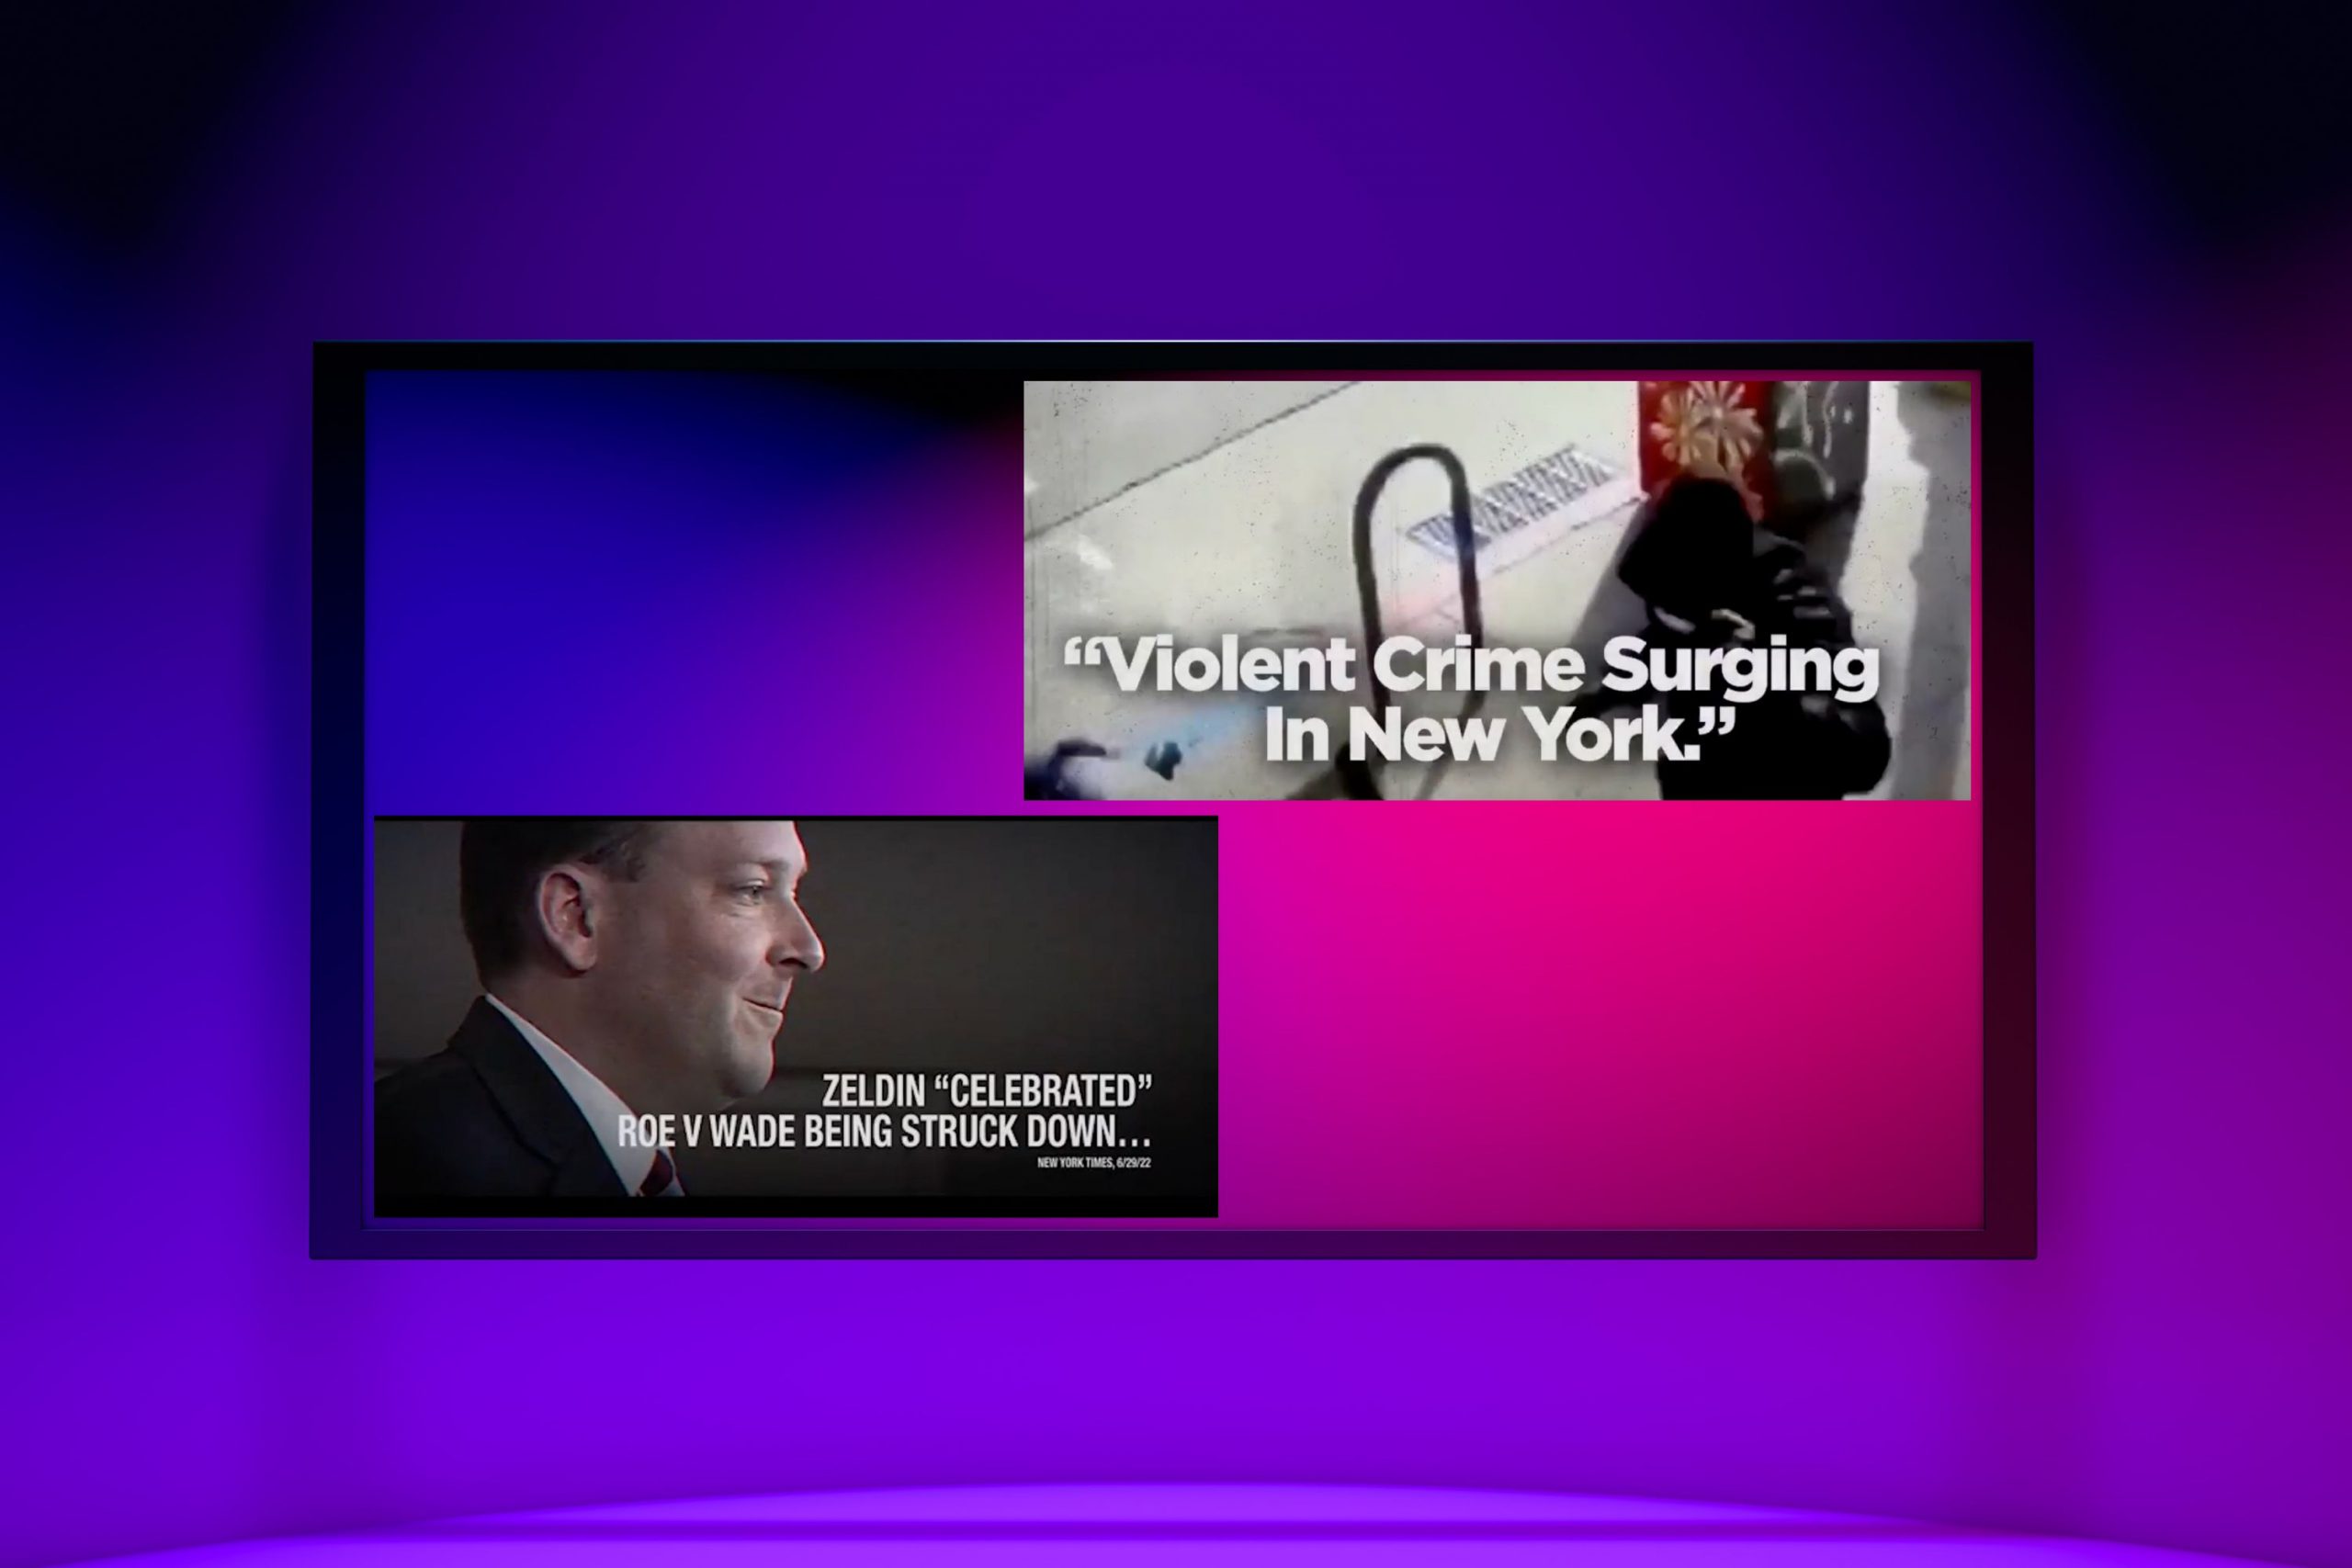 Negative political ads displayed on television